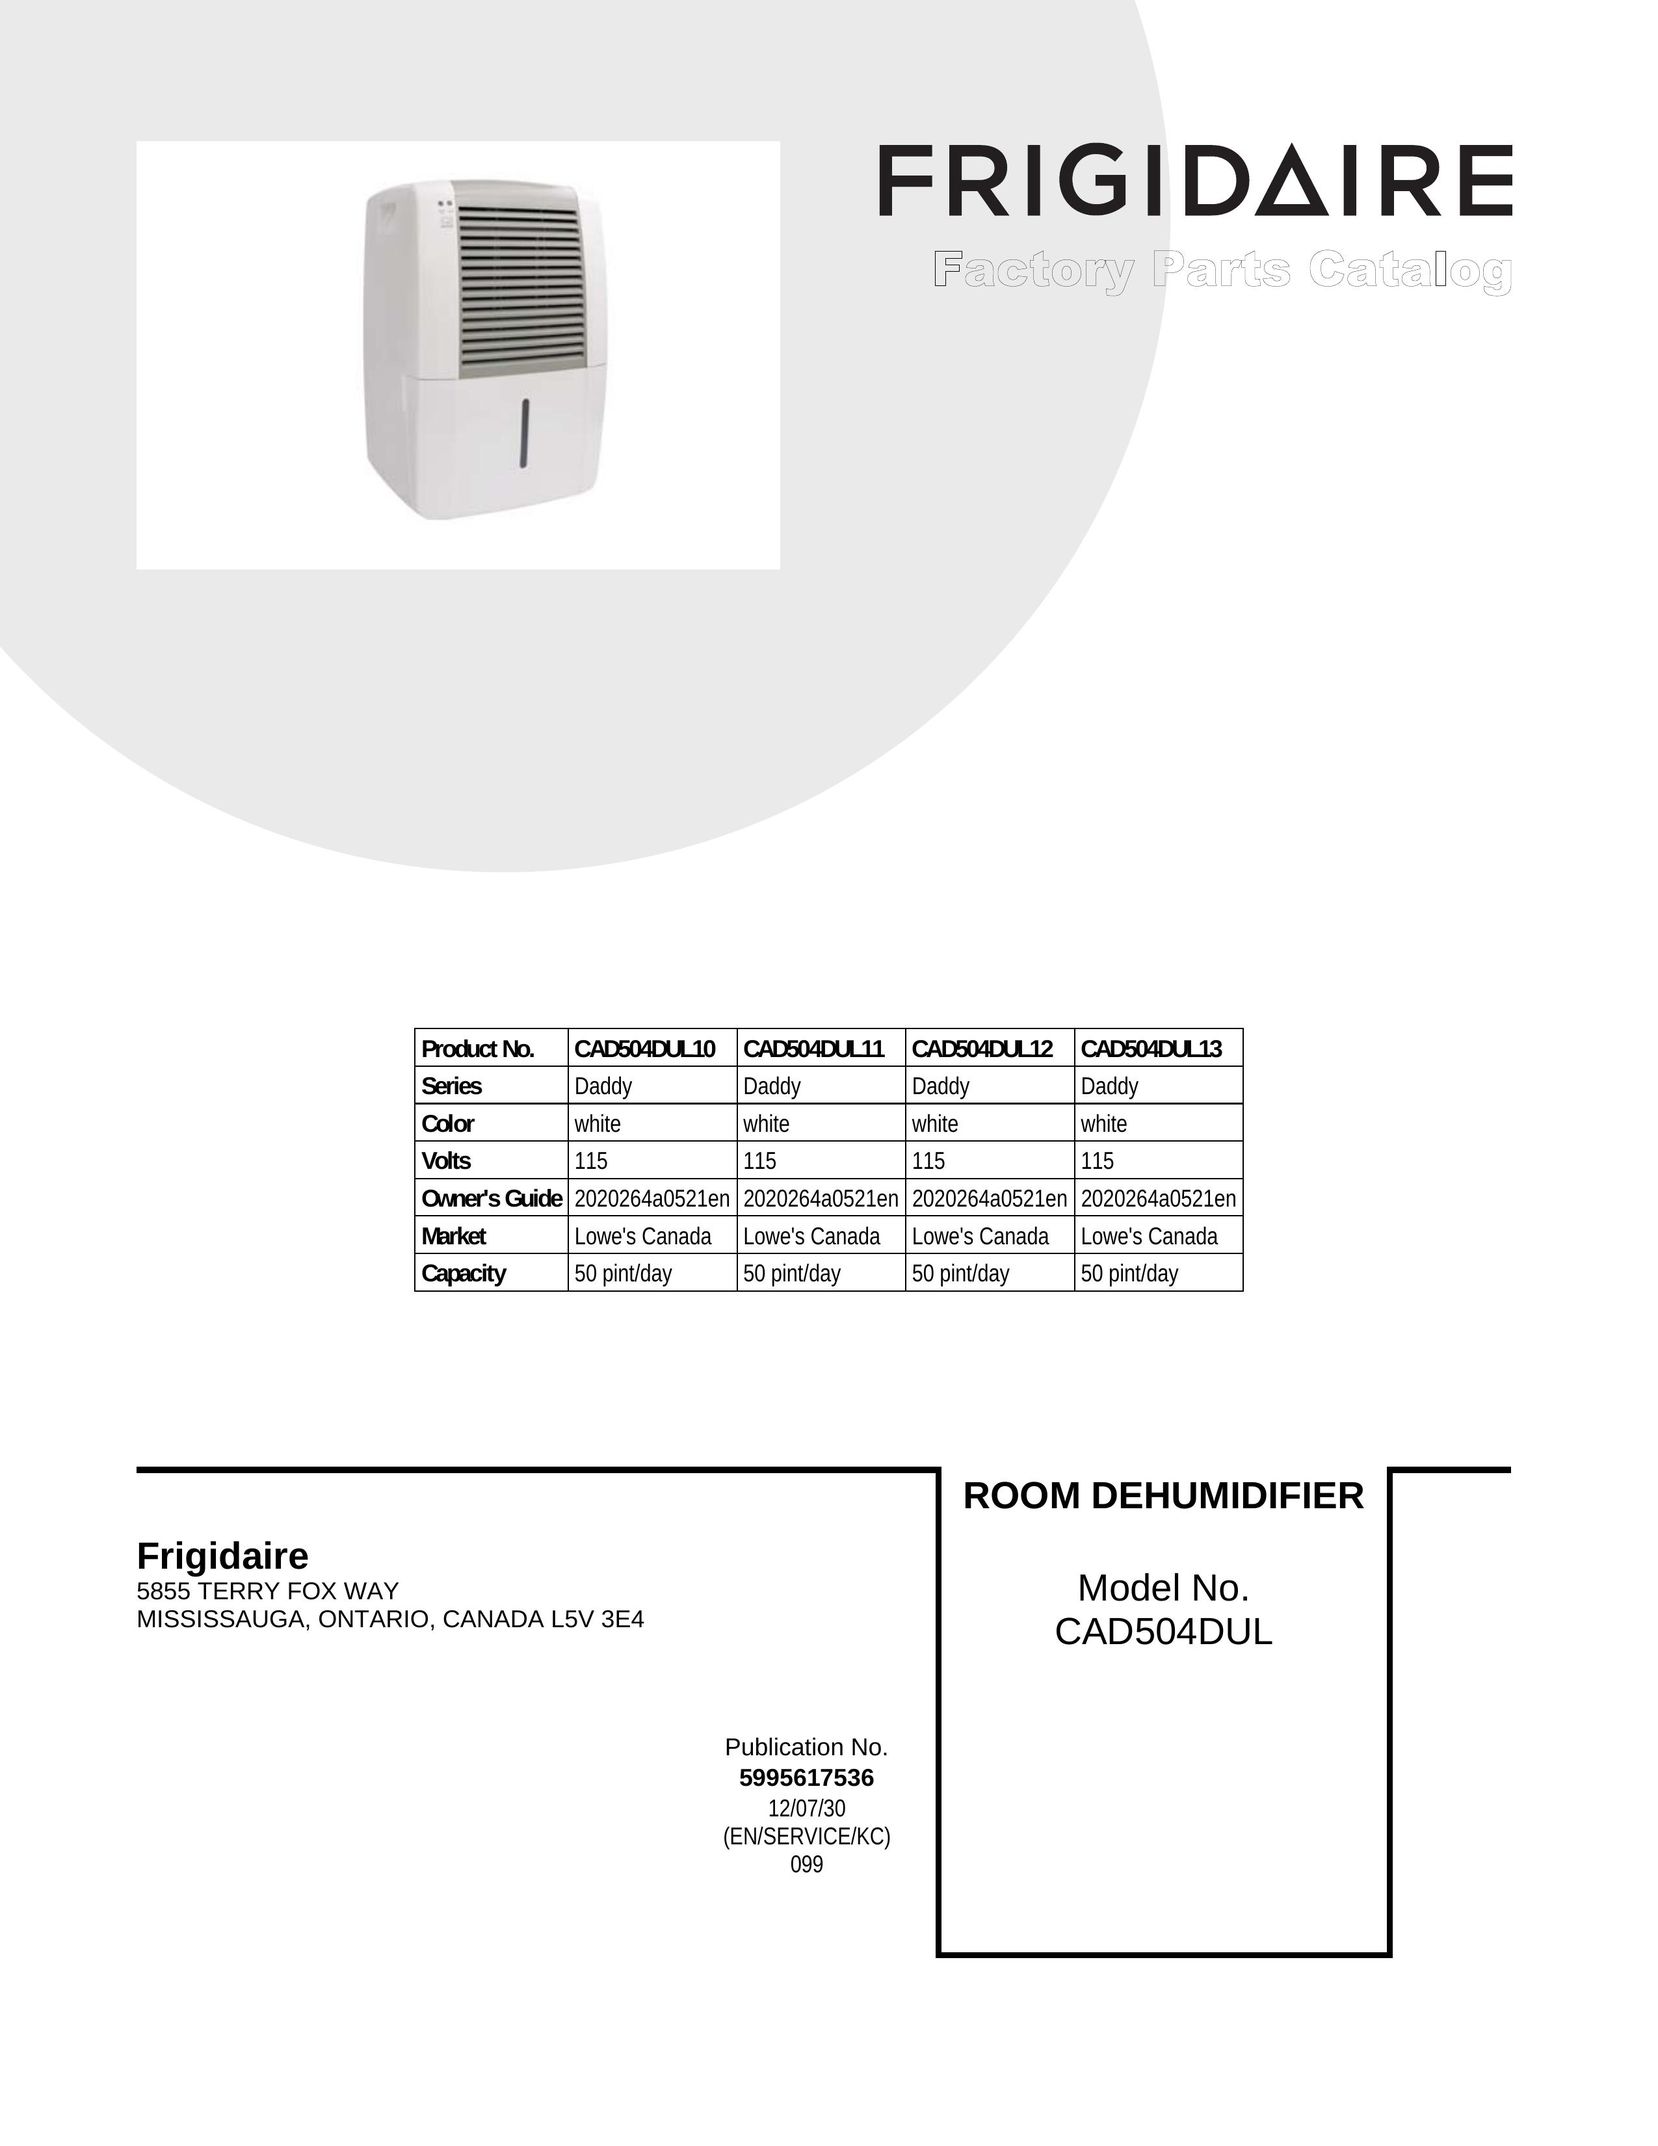 Frigidaire CAD504DUL12 Dehumidifier User Manual